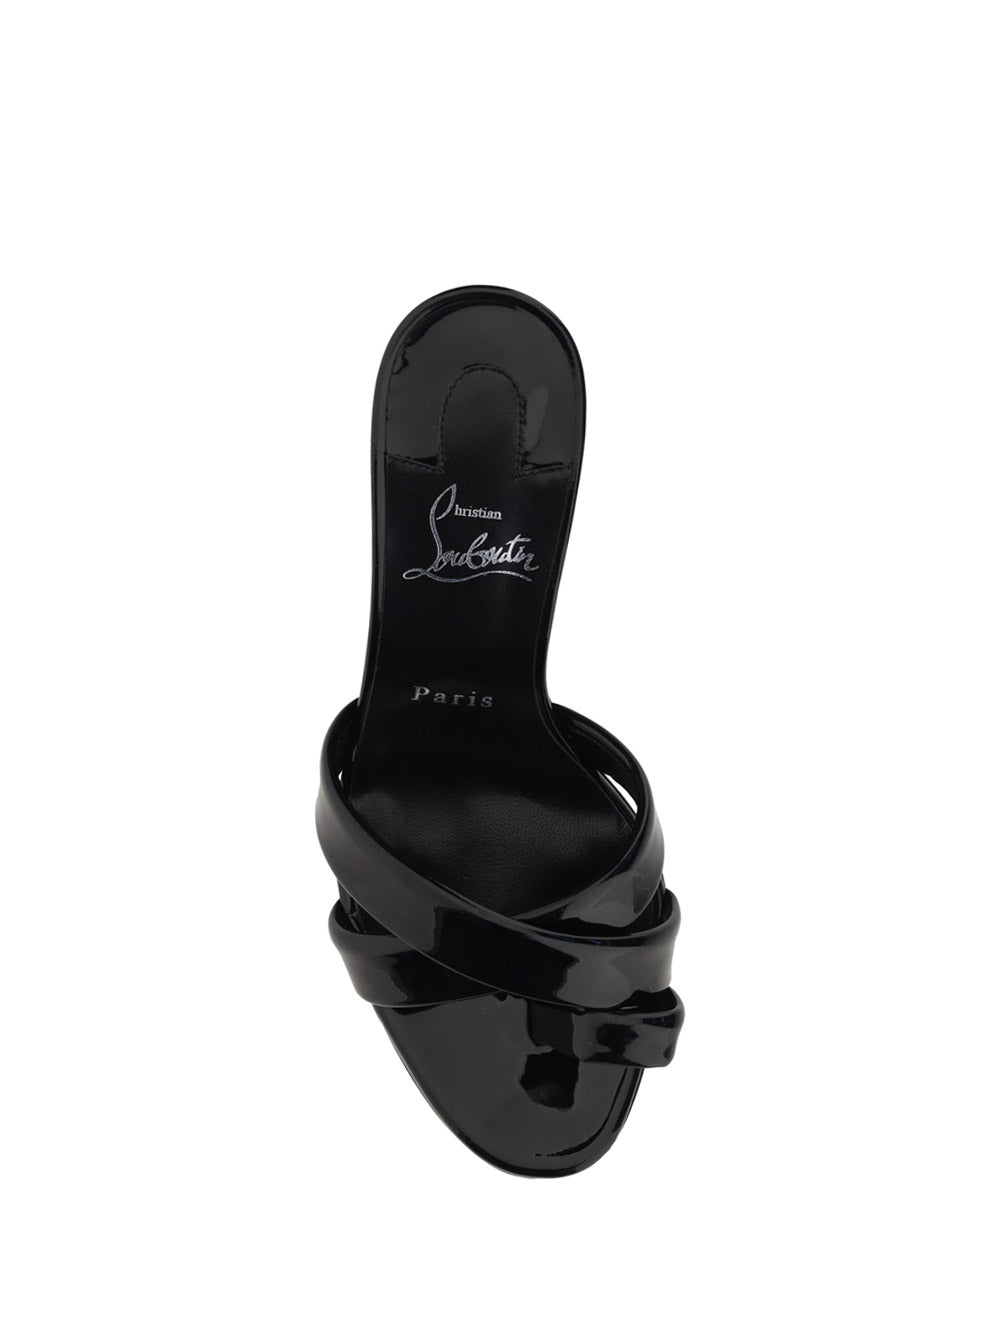 Simply Mule Sandal - Black / Patent